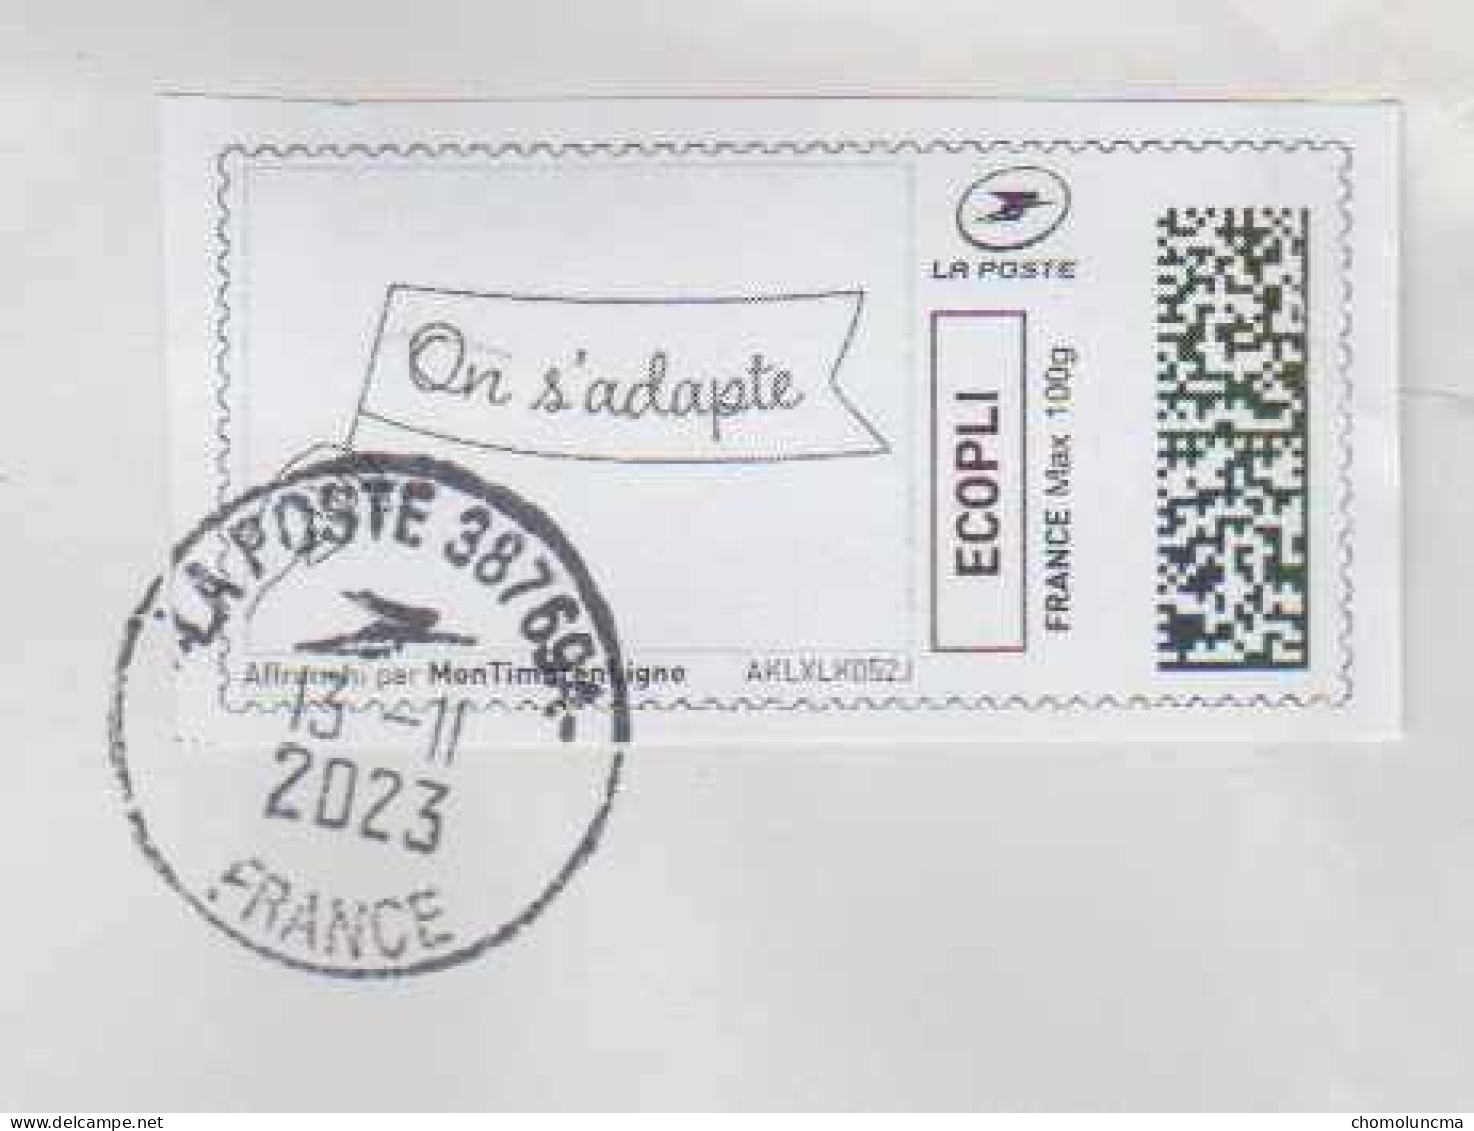 Montimbrenligne On S' Adapte Timbre Imprimé Post Office Printed Stamp Pli Courrier Cover Lettre Ecopli 100g Letter - Timbres à Imprimer (Montimbrenligne)